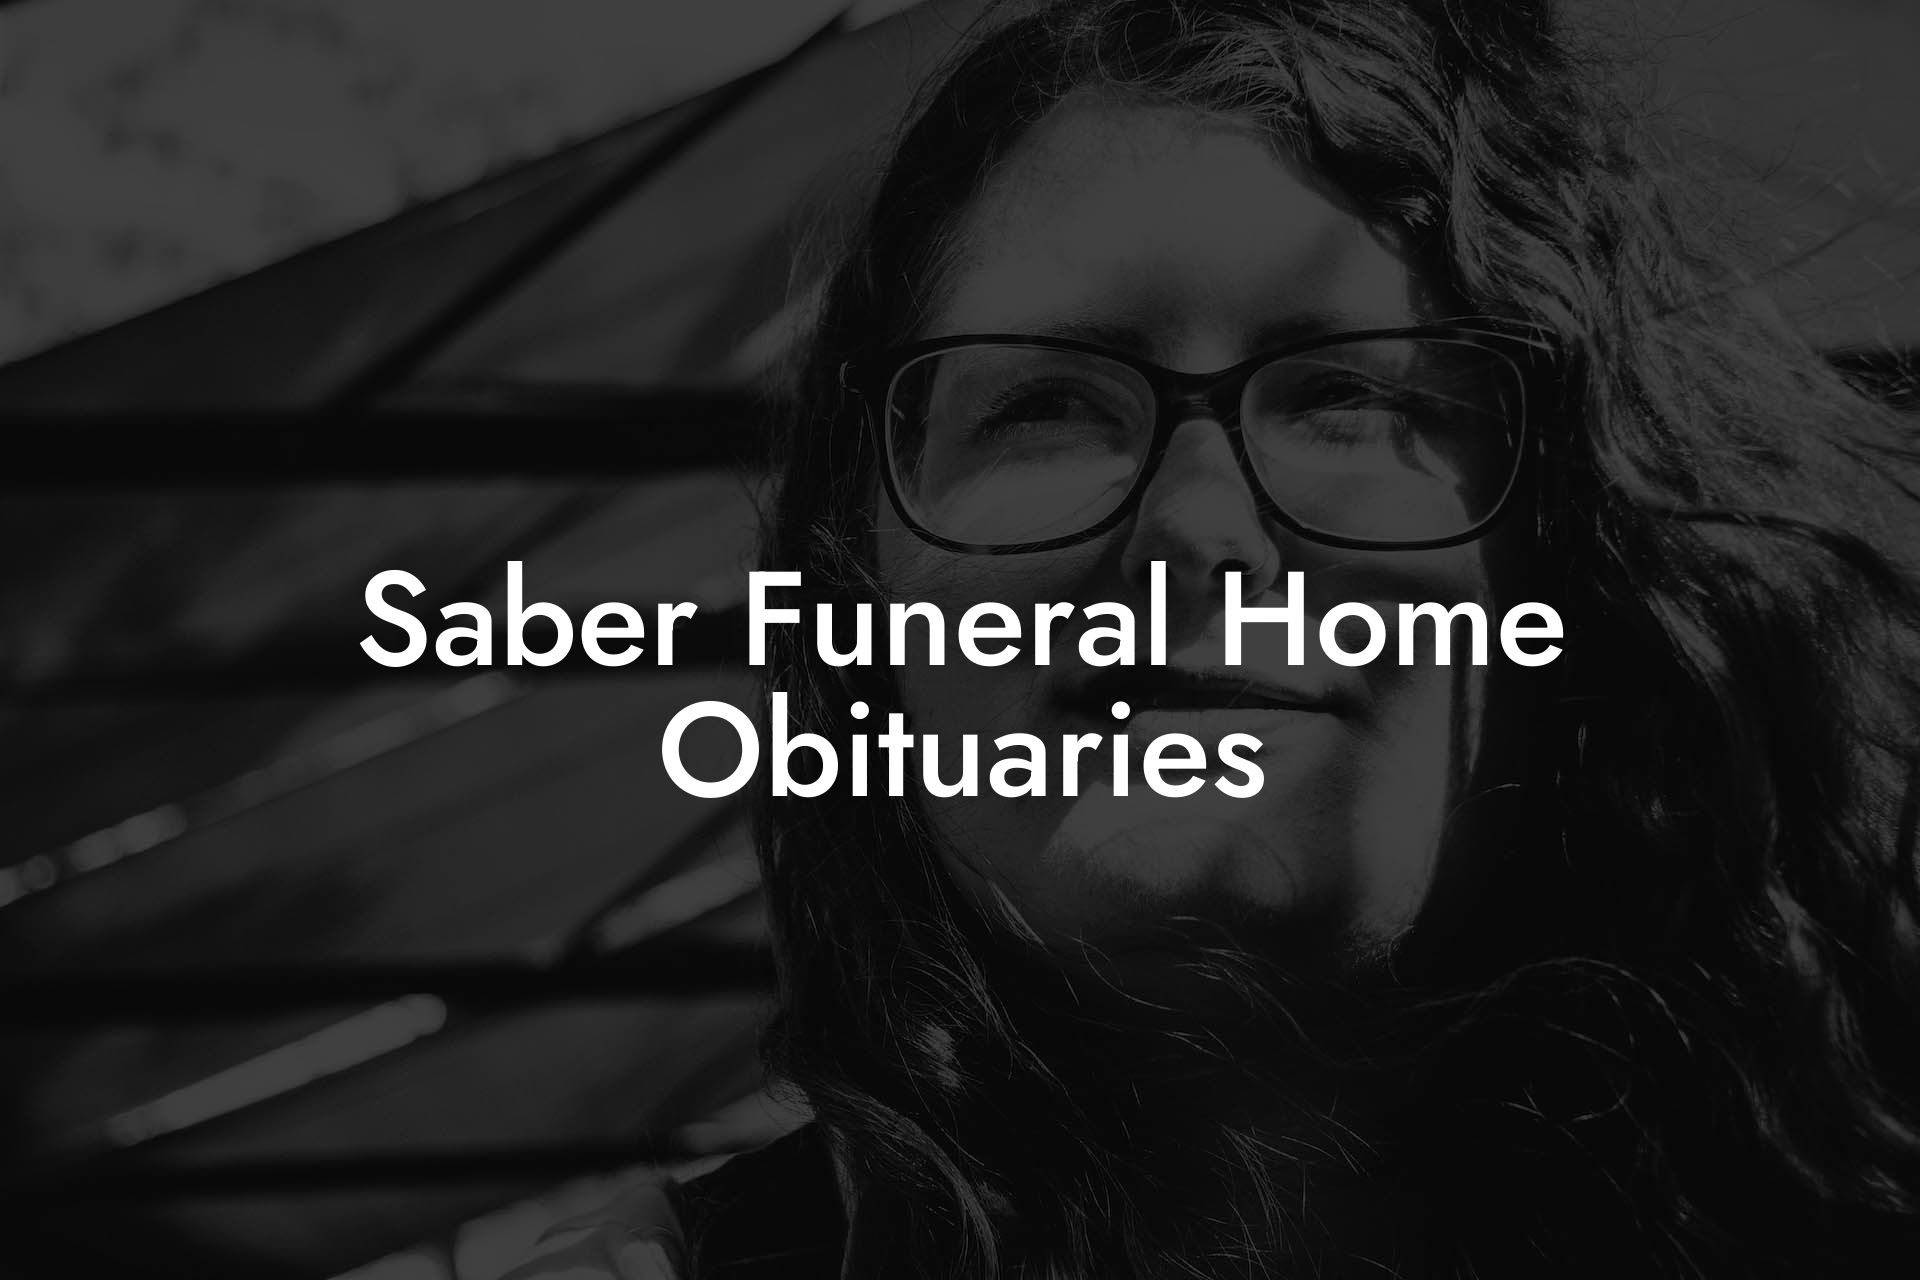 Saber Funeral Home Obituaries